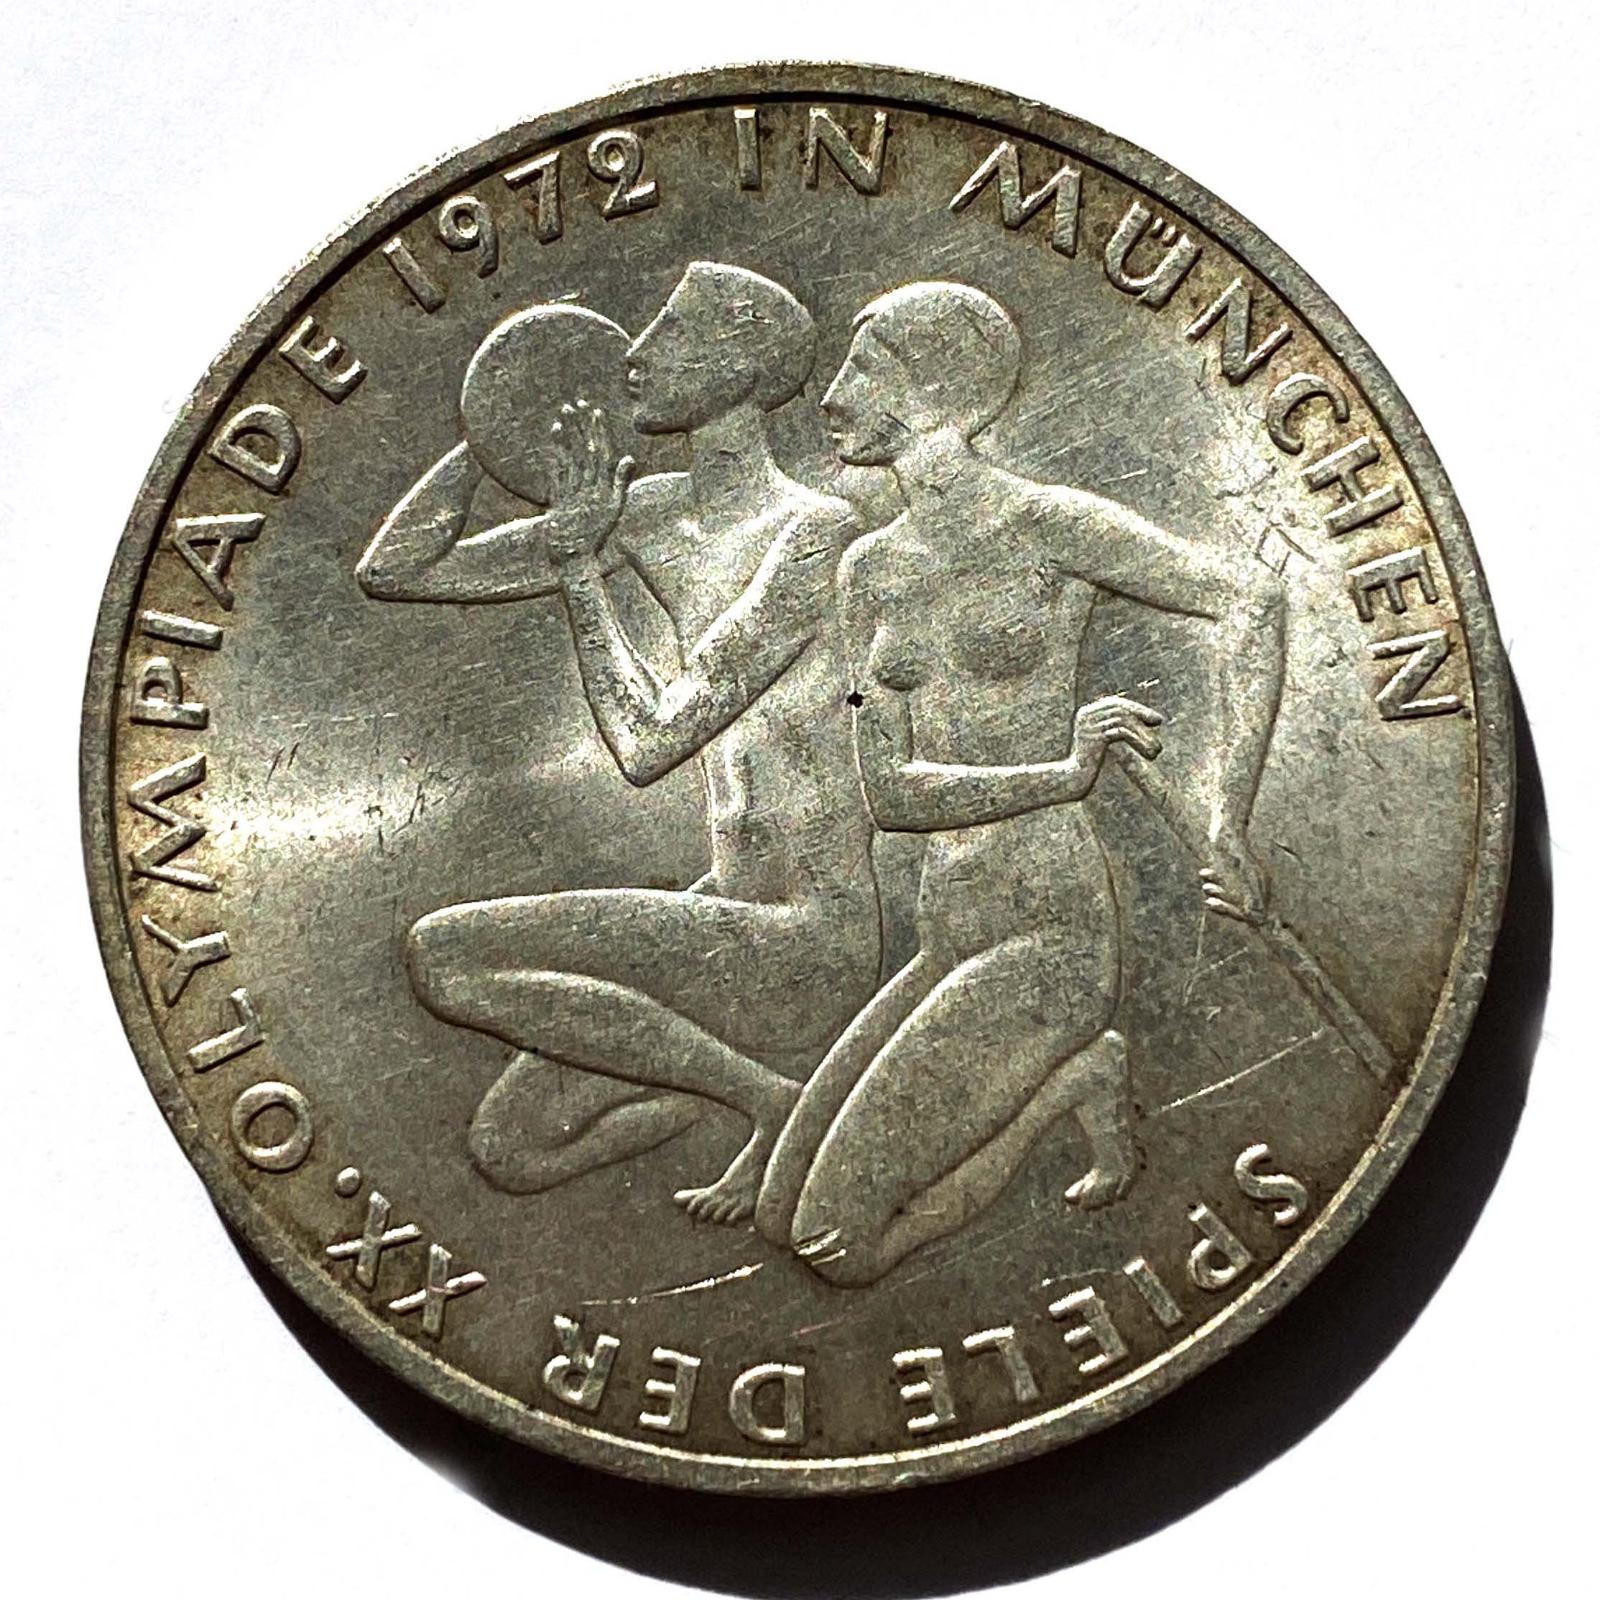 Strieborná 10 Marka – atléti OH Mníchov, 1972 J Nemecko - Numizmatika